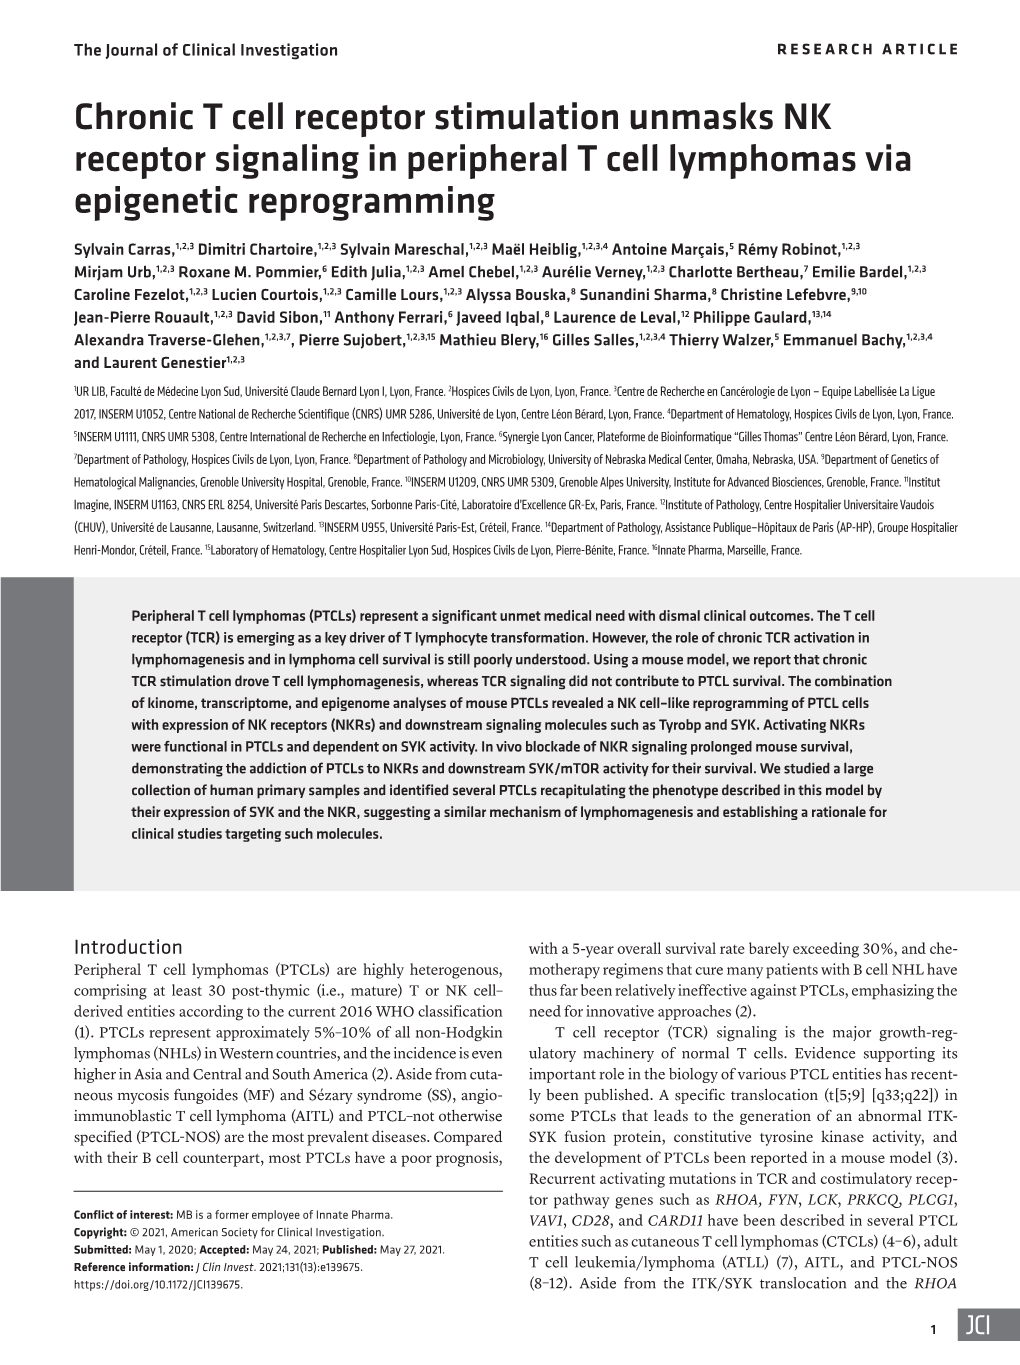 Chronic T Cell Receptor Stimulation Unmasks NK Receptor Signaling in Peripheral T Cell Lymphomas Via Epigenetic Reprogramming